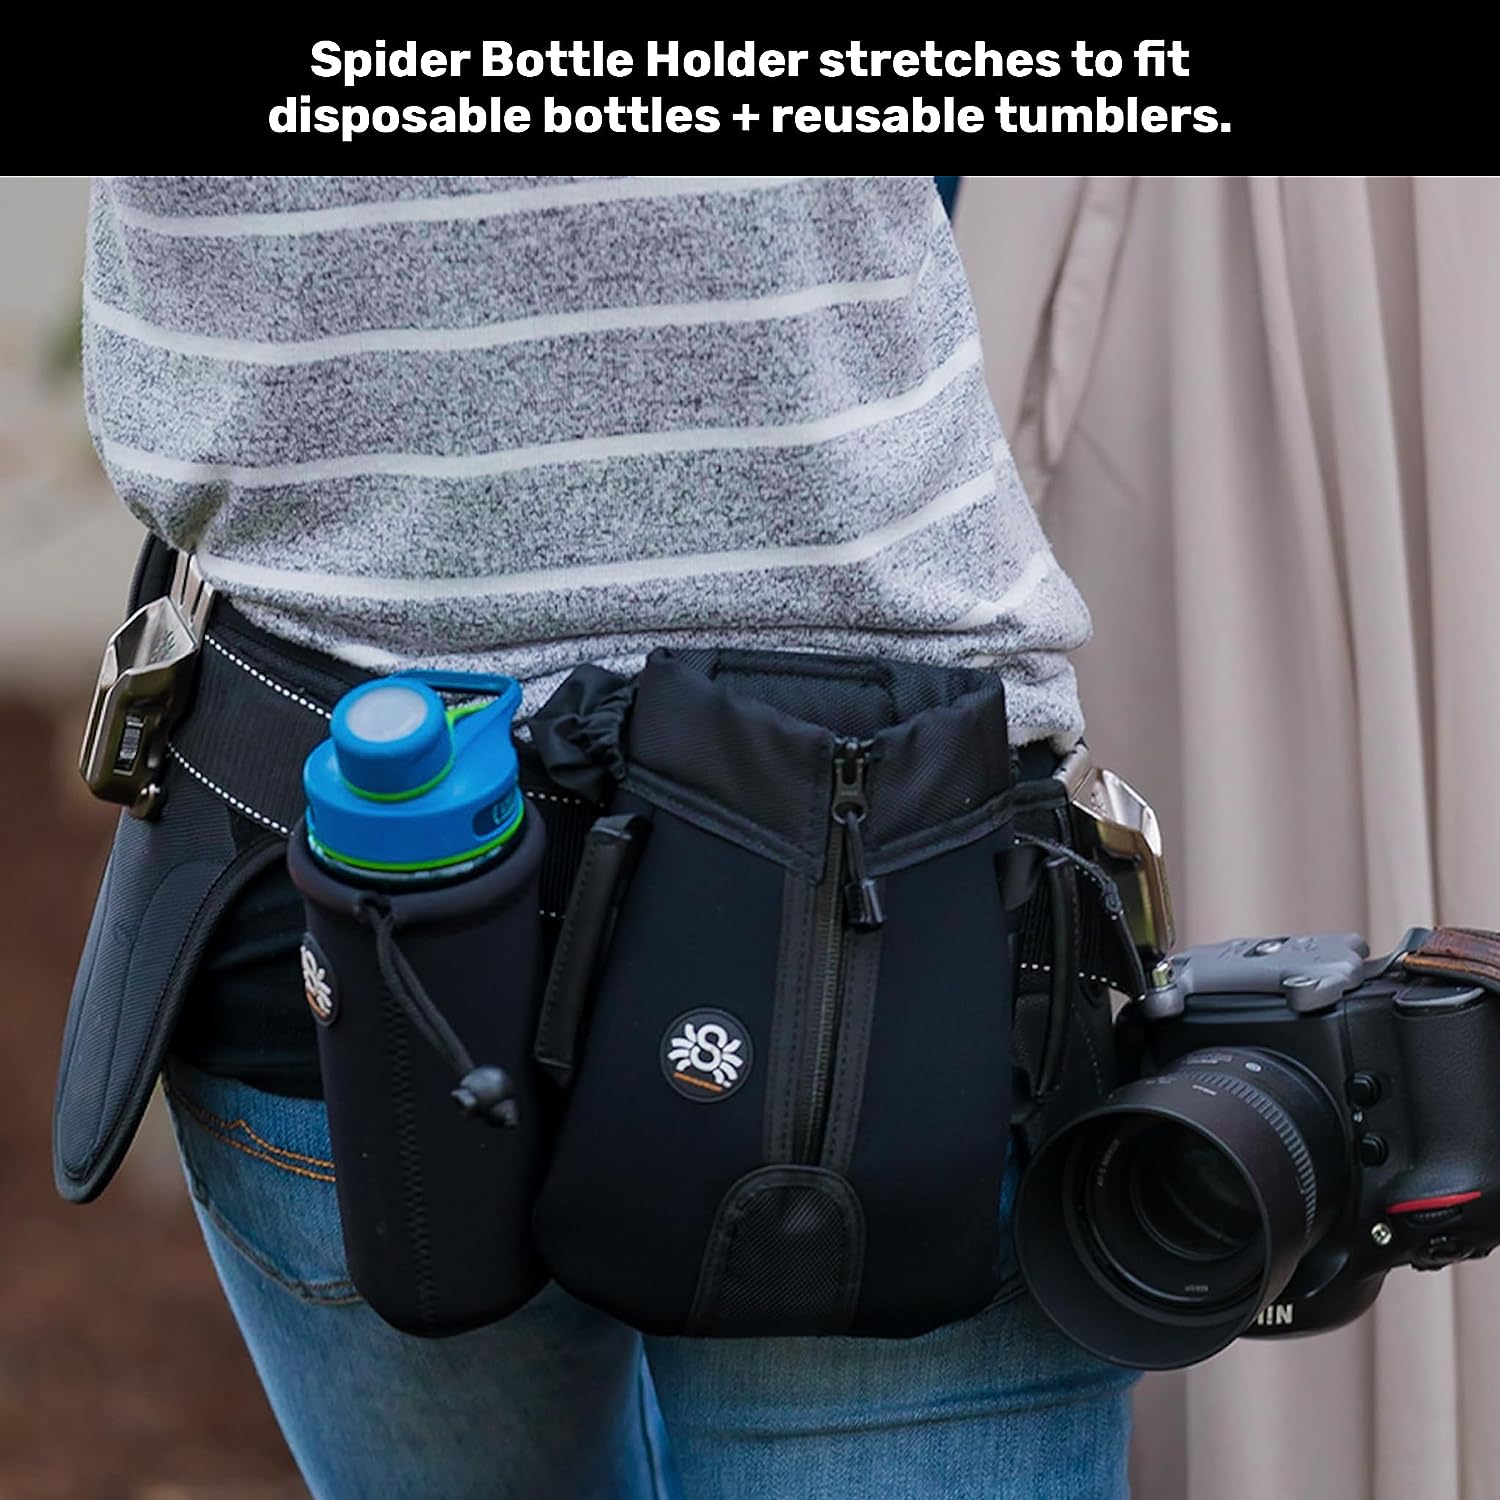 Spider Monkey Water Bottle Holder + Base Clip